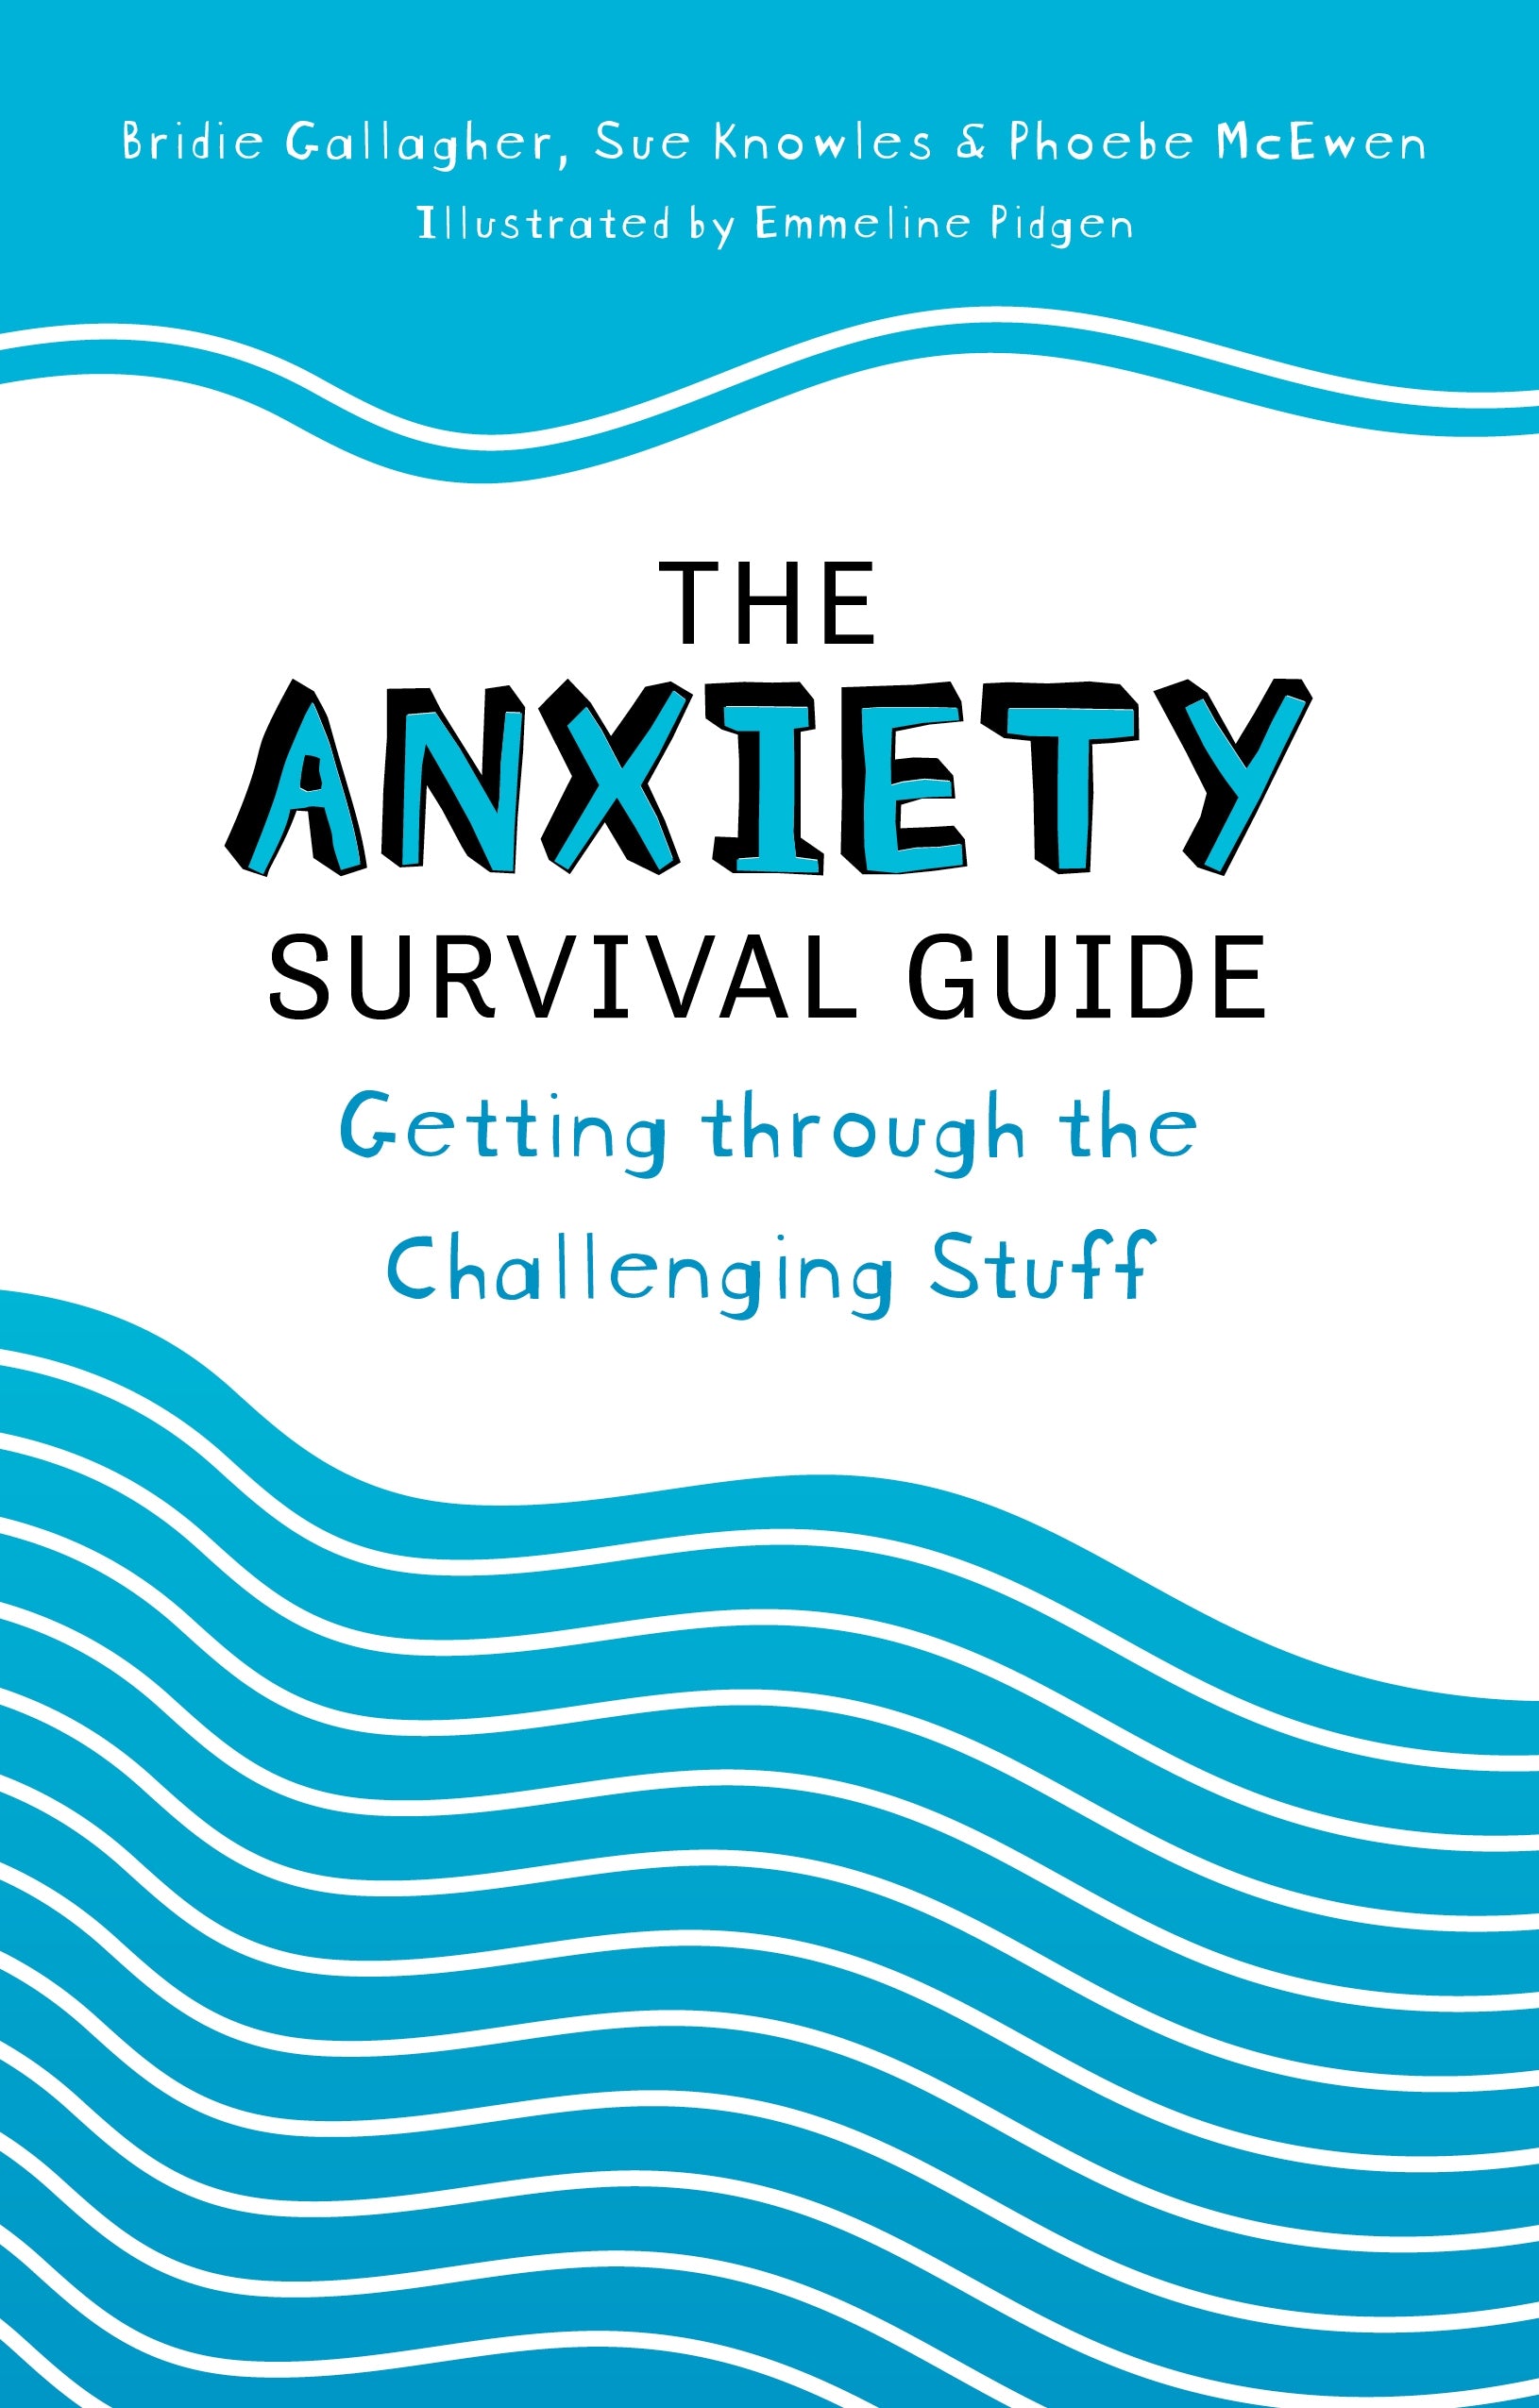 The Anxiety Survival Guide by Bridie Gallagher, Sue Knowles, Phoebe McEwen, Emmeline Pidgen